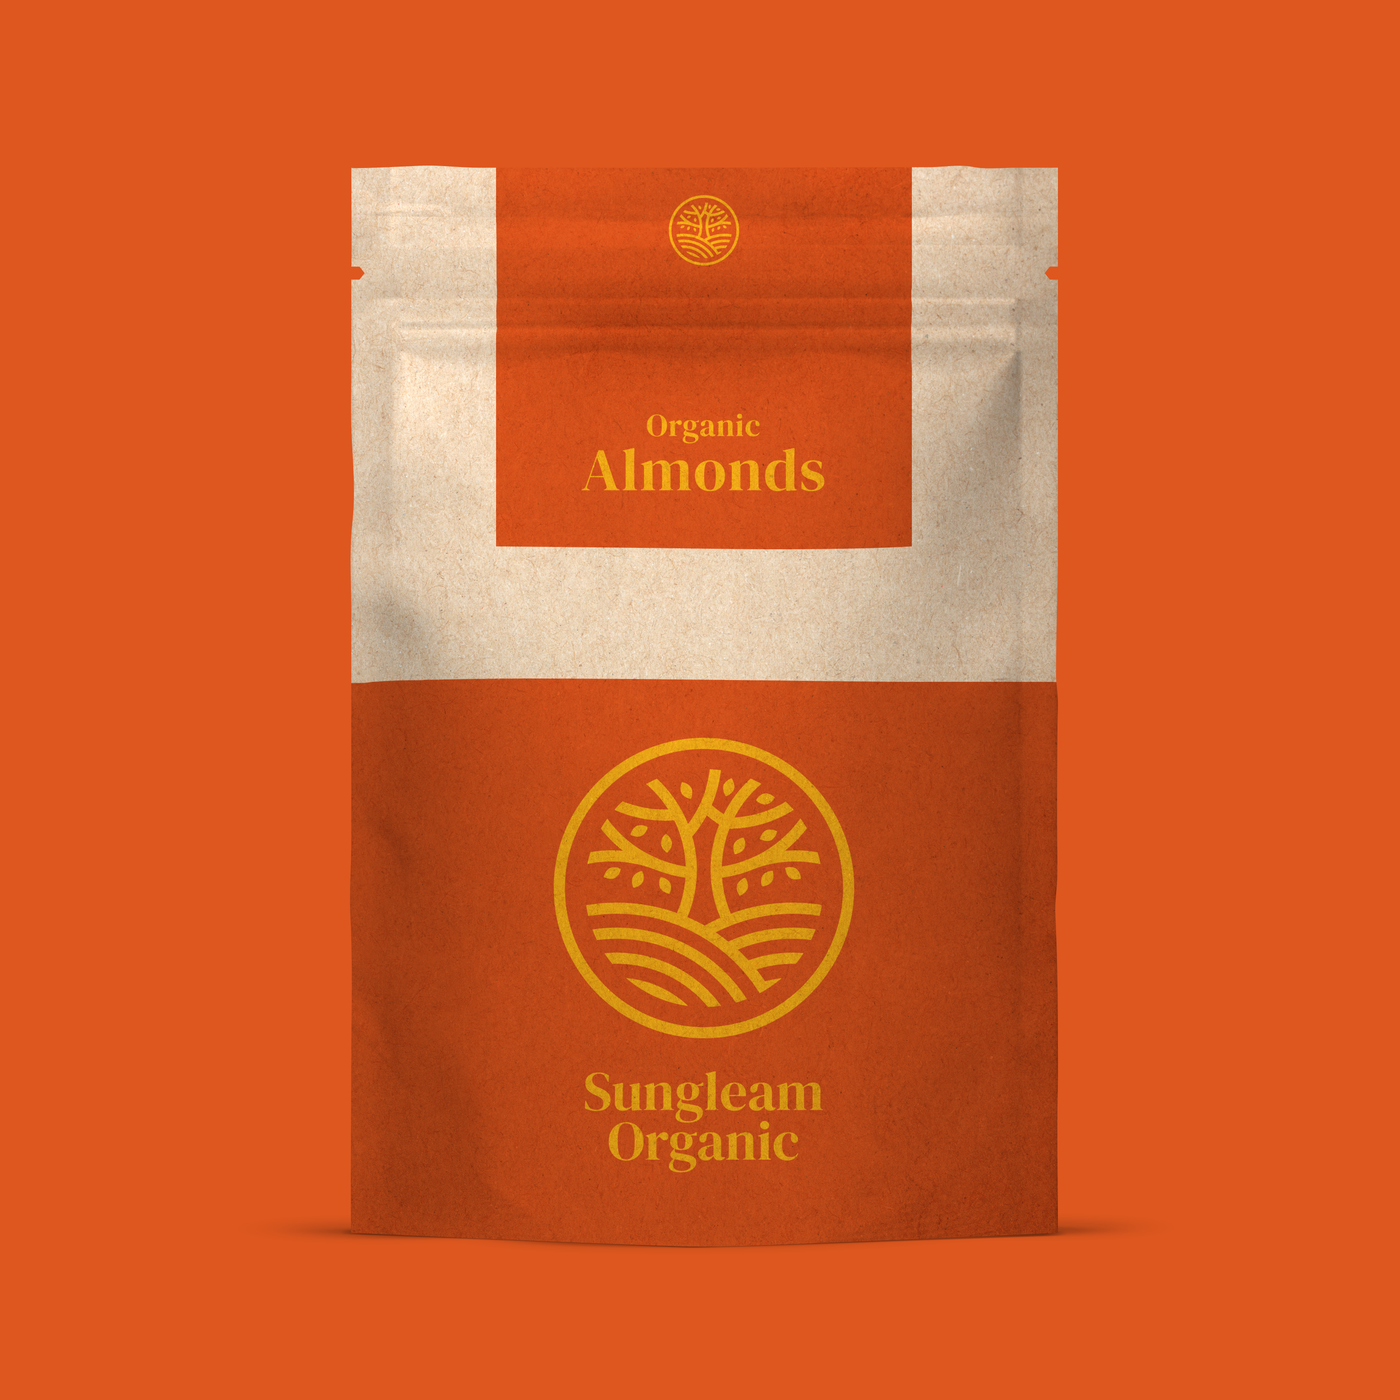 Sungleam Organic Almond Nuts product